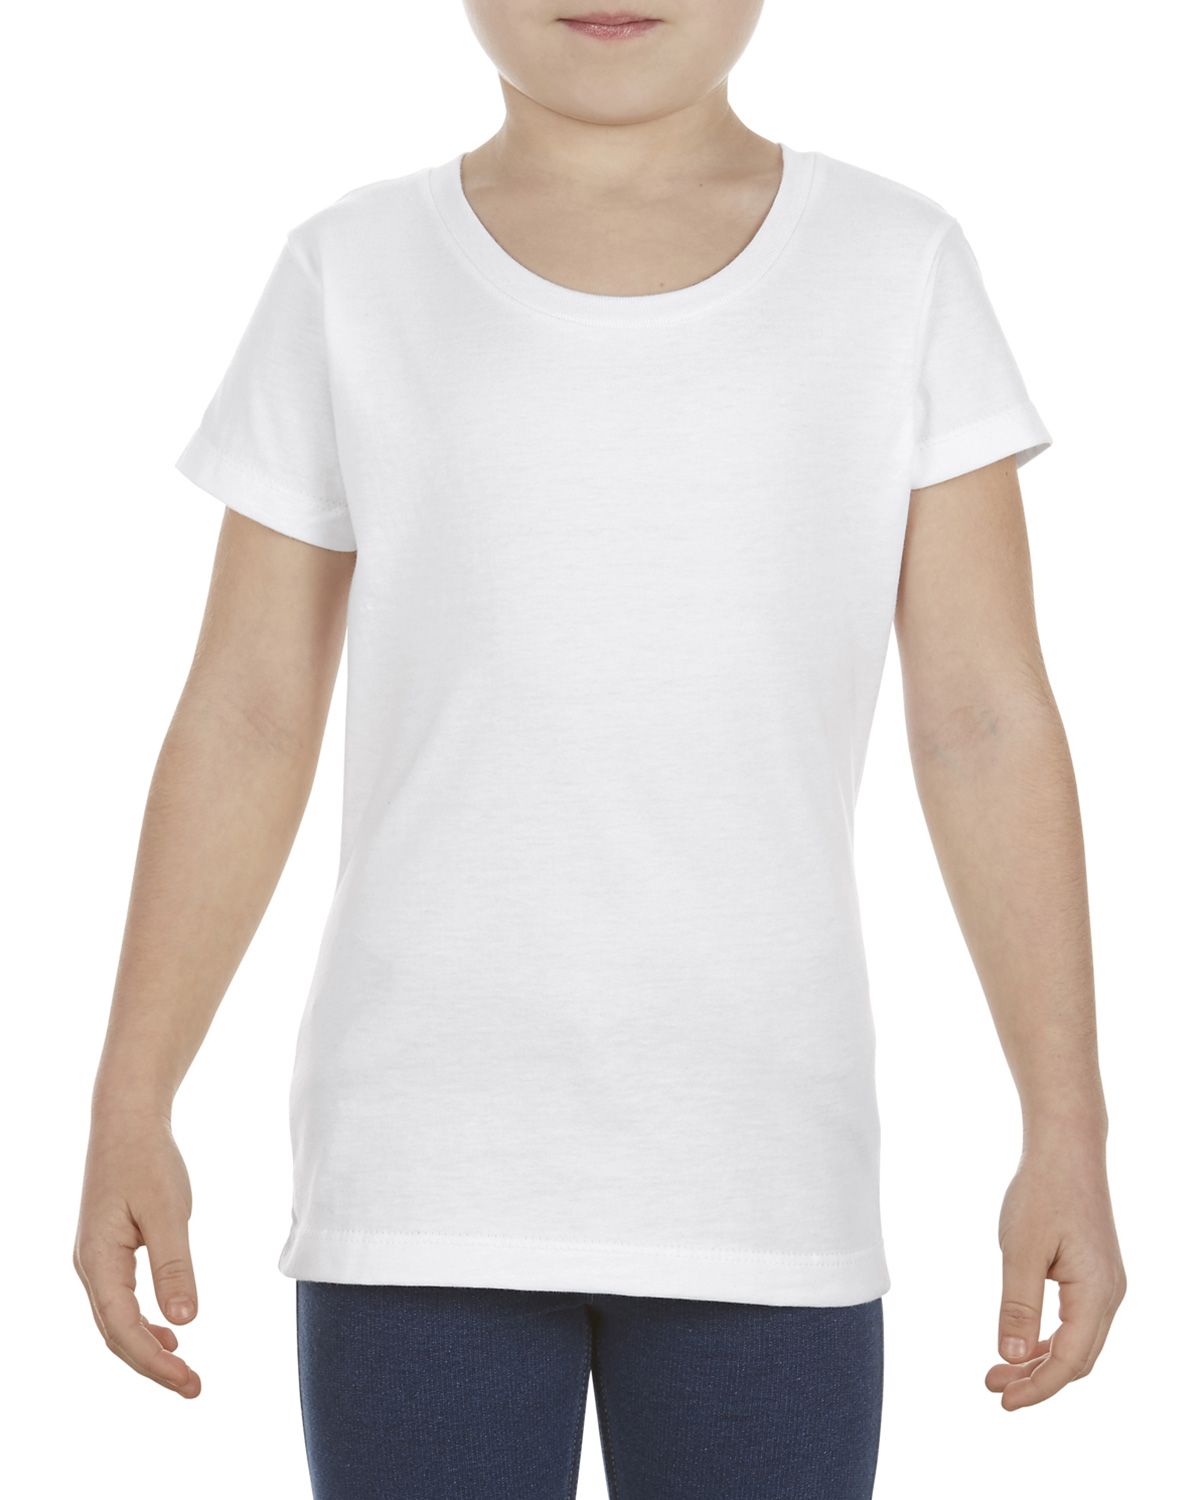 Alstyle AL3362 Youth 4.3 oz. Ringspun Cotton T-Shirt